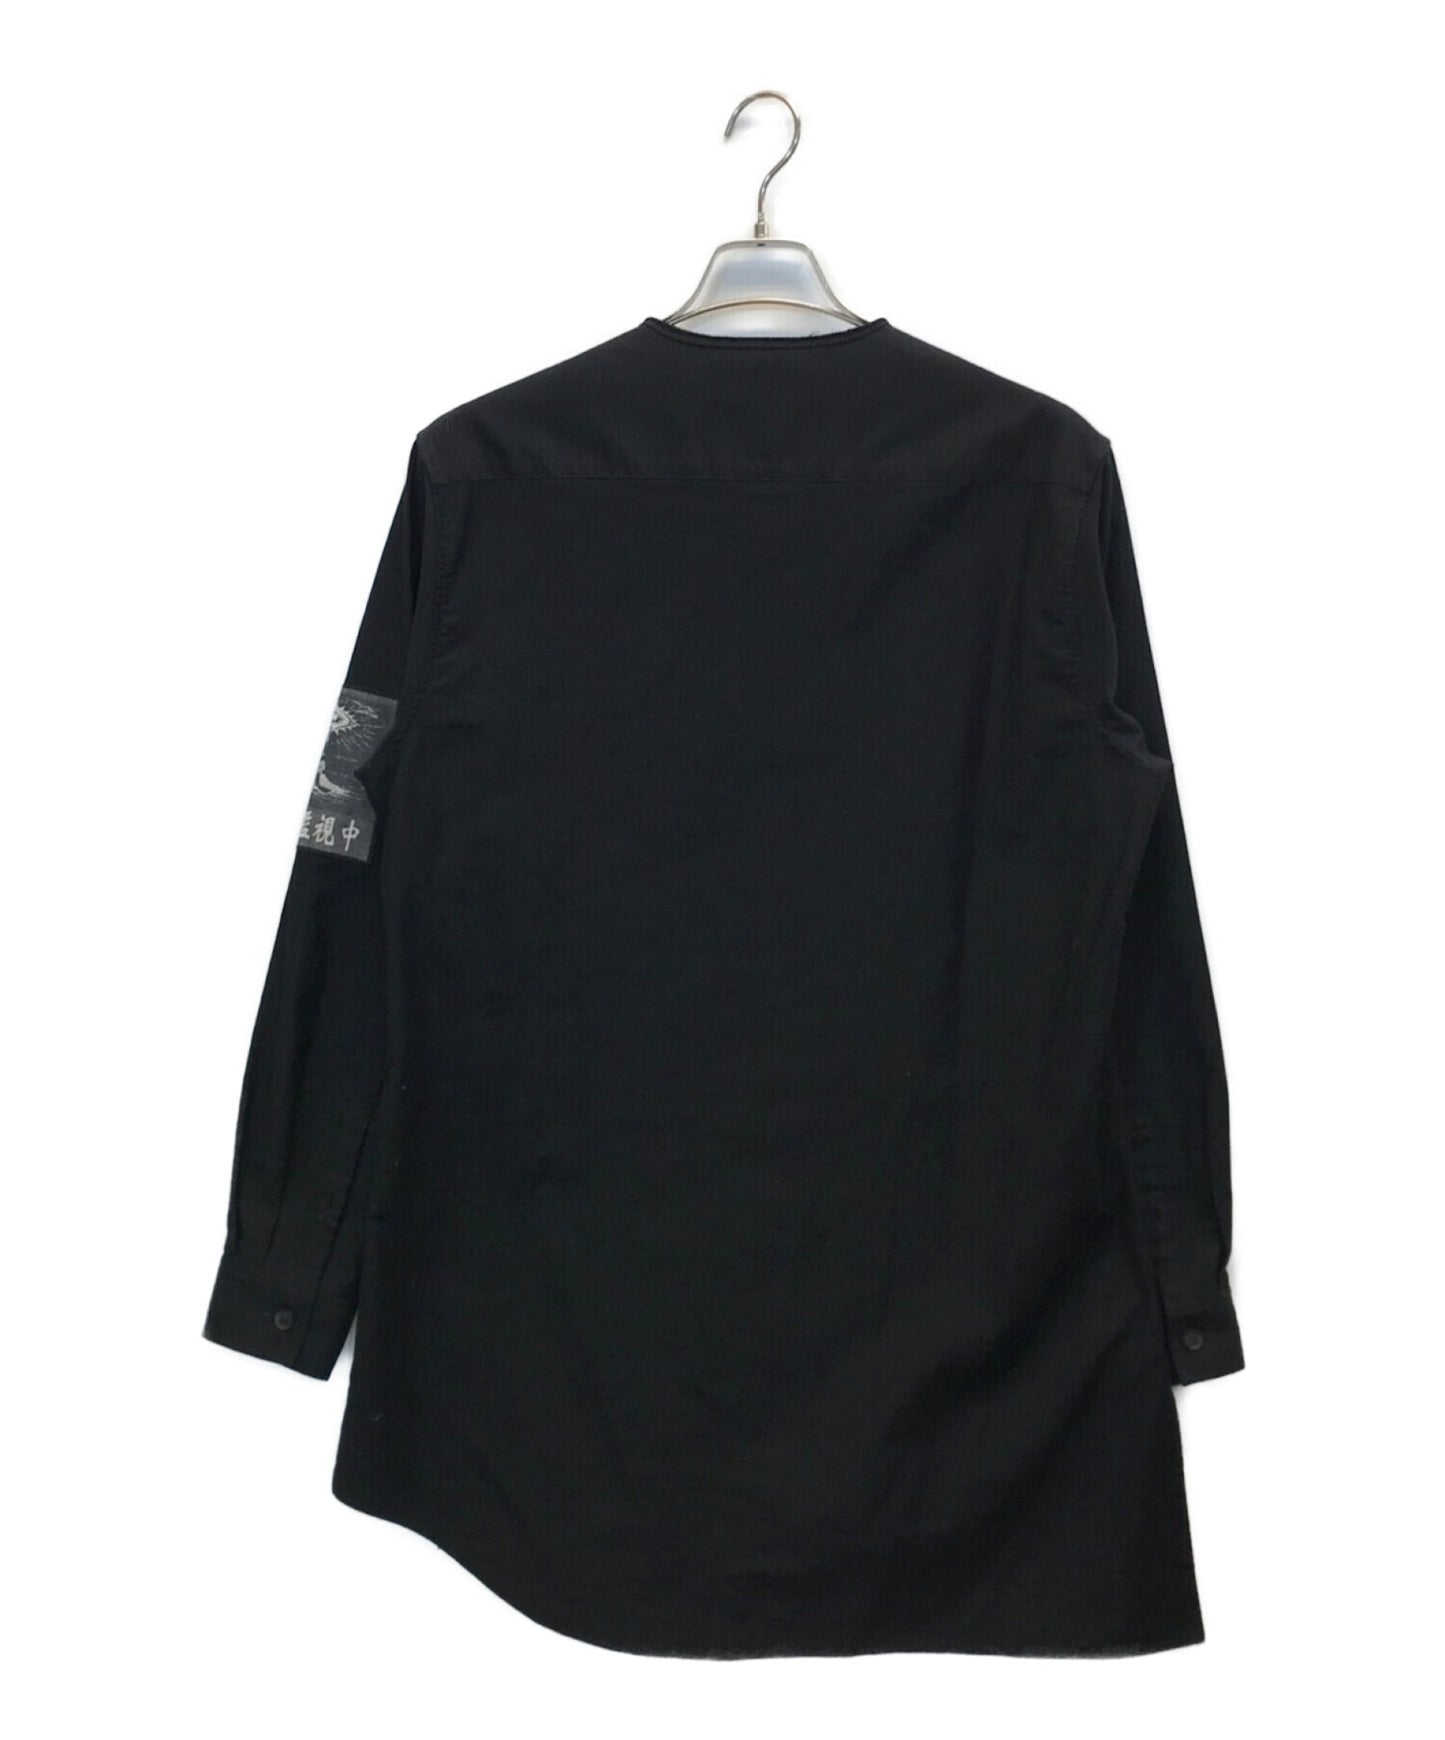 Yohji Yamamoto pour homme Special Watch" patch unbalanced blouse collarless shirt HD-B55-059